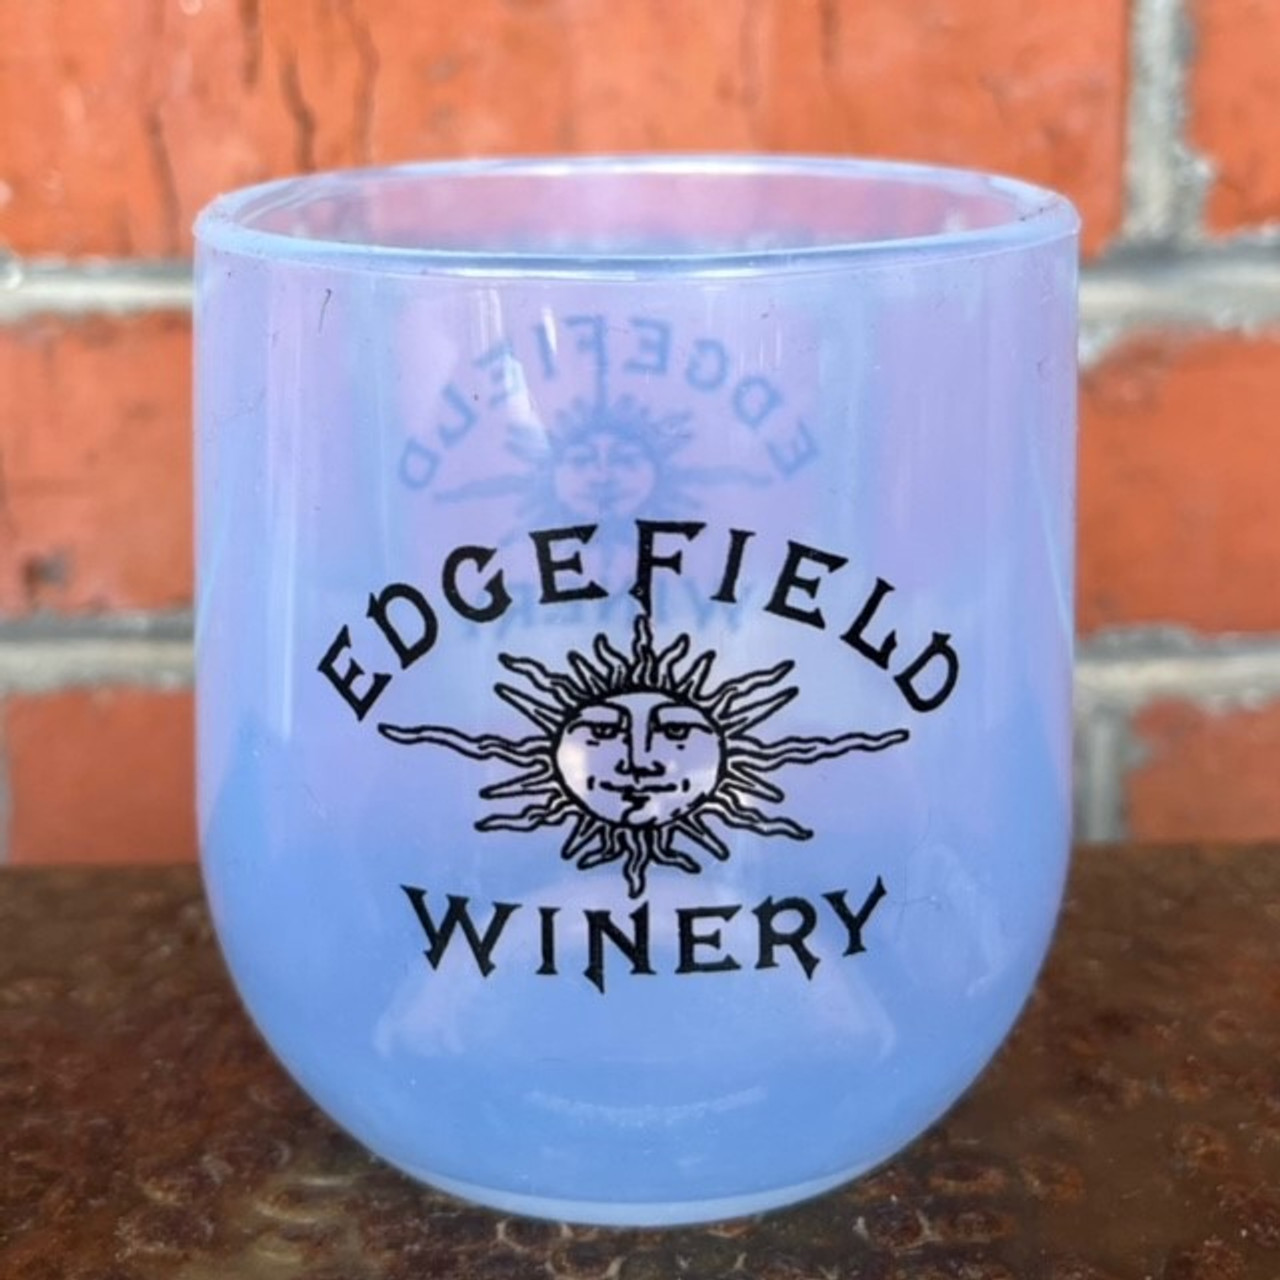 Edgefield Winery Stemless Wine Glass